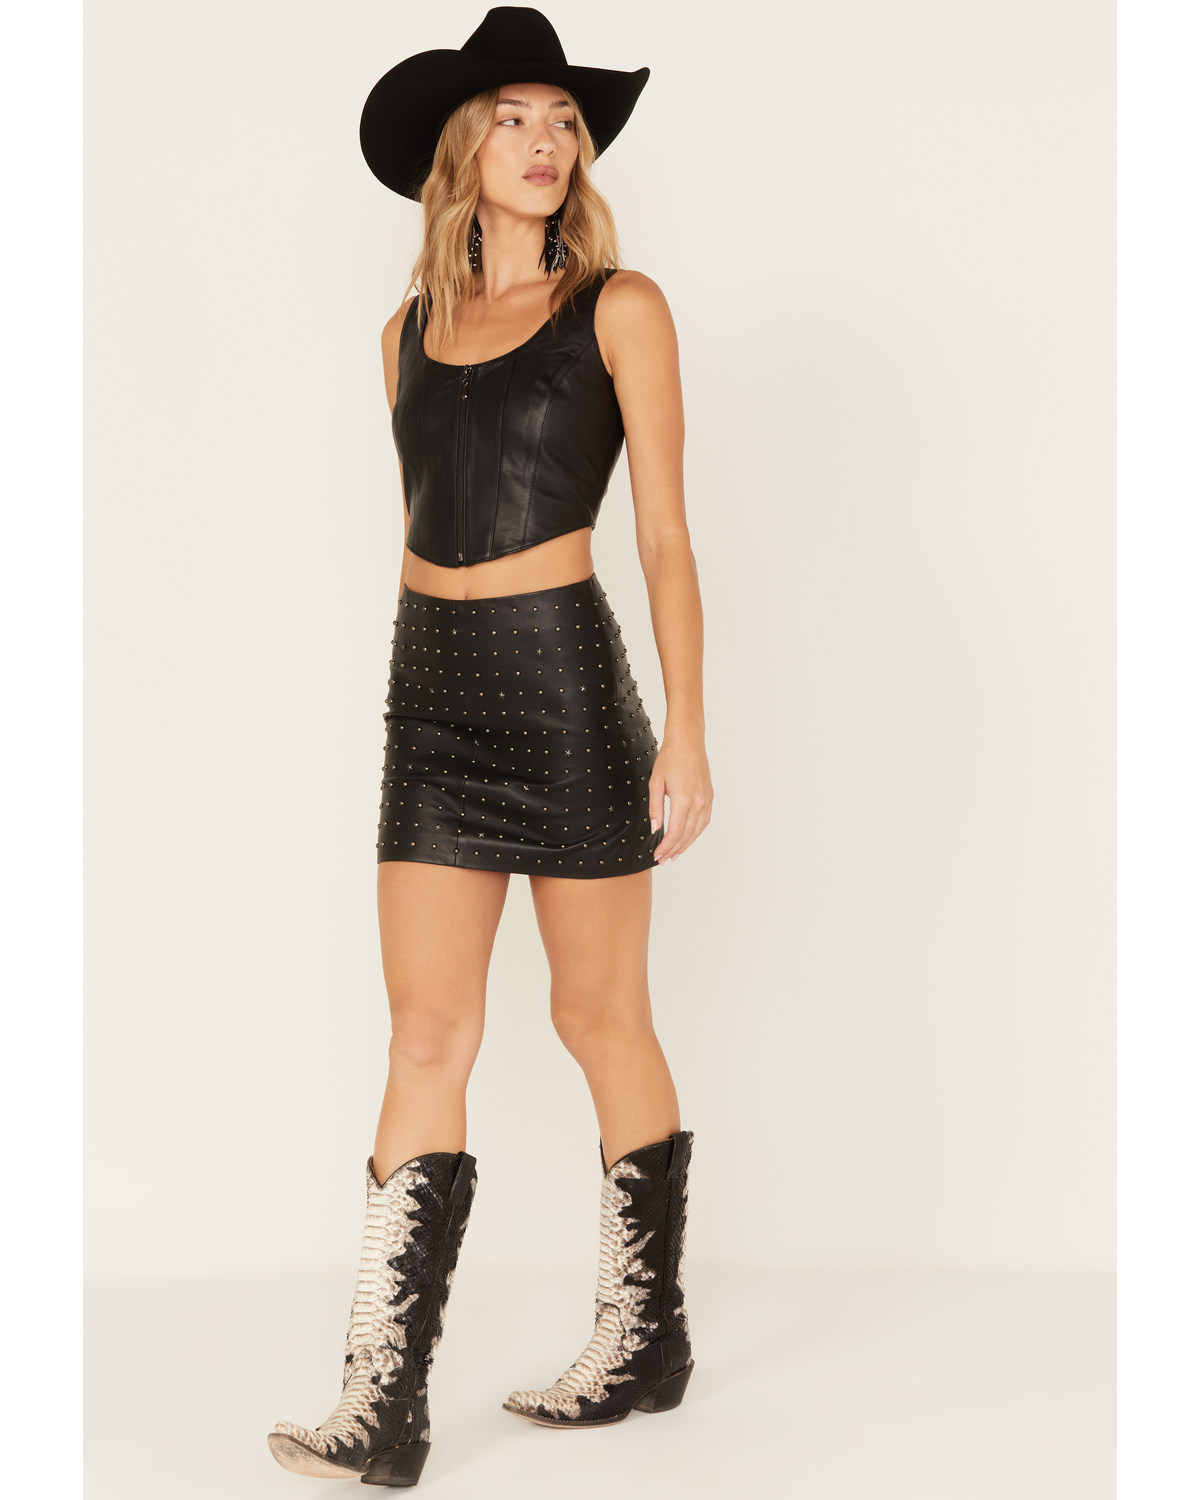 Idyllwind Women's Gallaway Studded Leather Mini Skirt